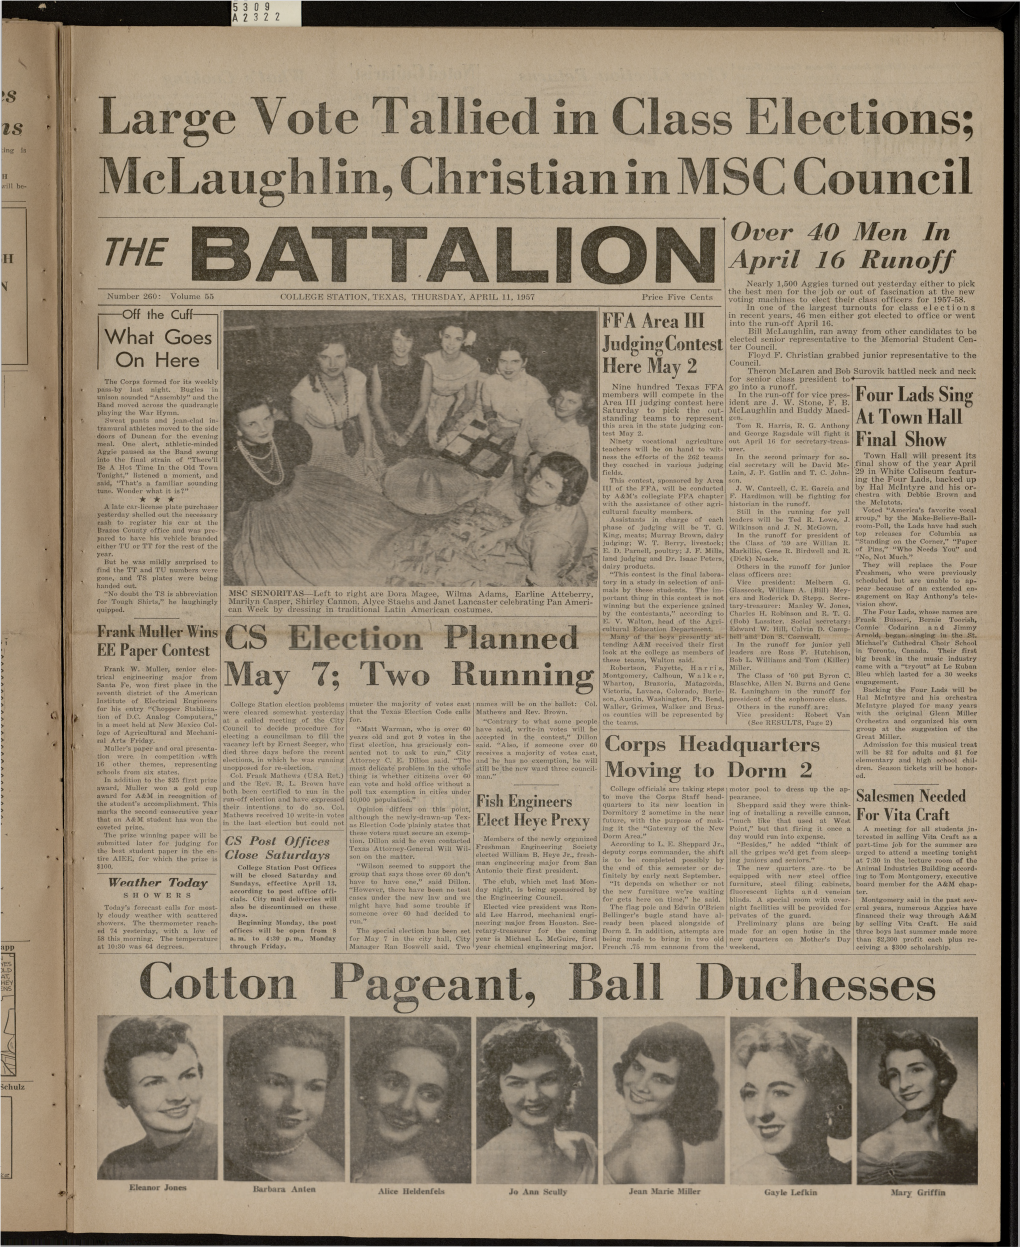 Mclaughlin, Christian in MSC Council Cotton Pageant, Ball Duchesses